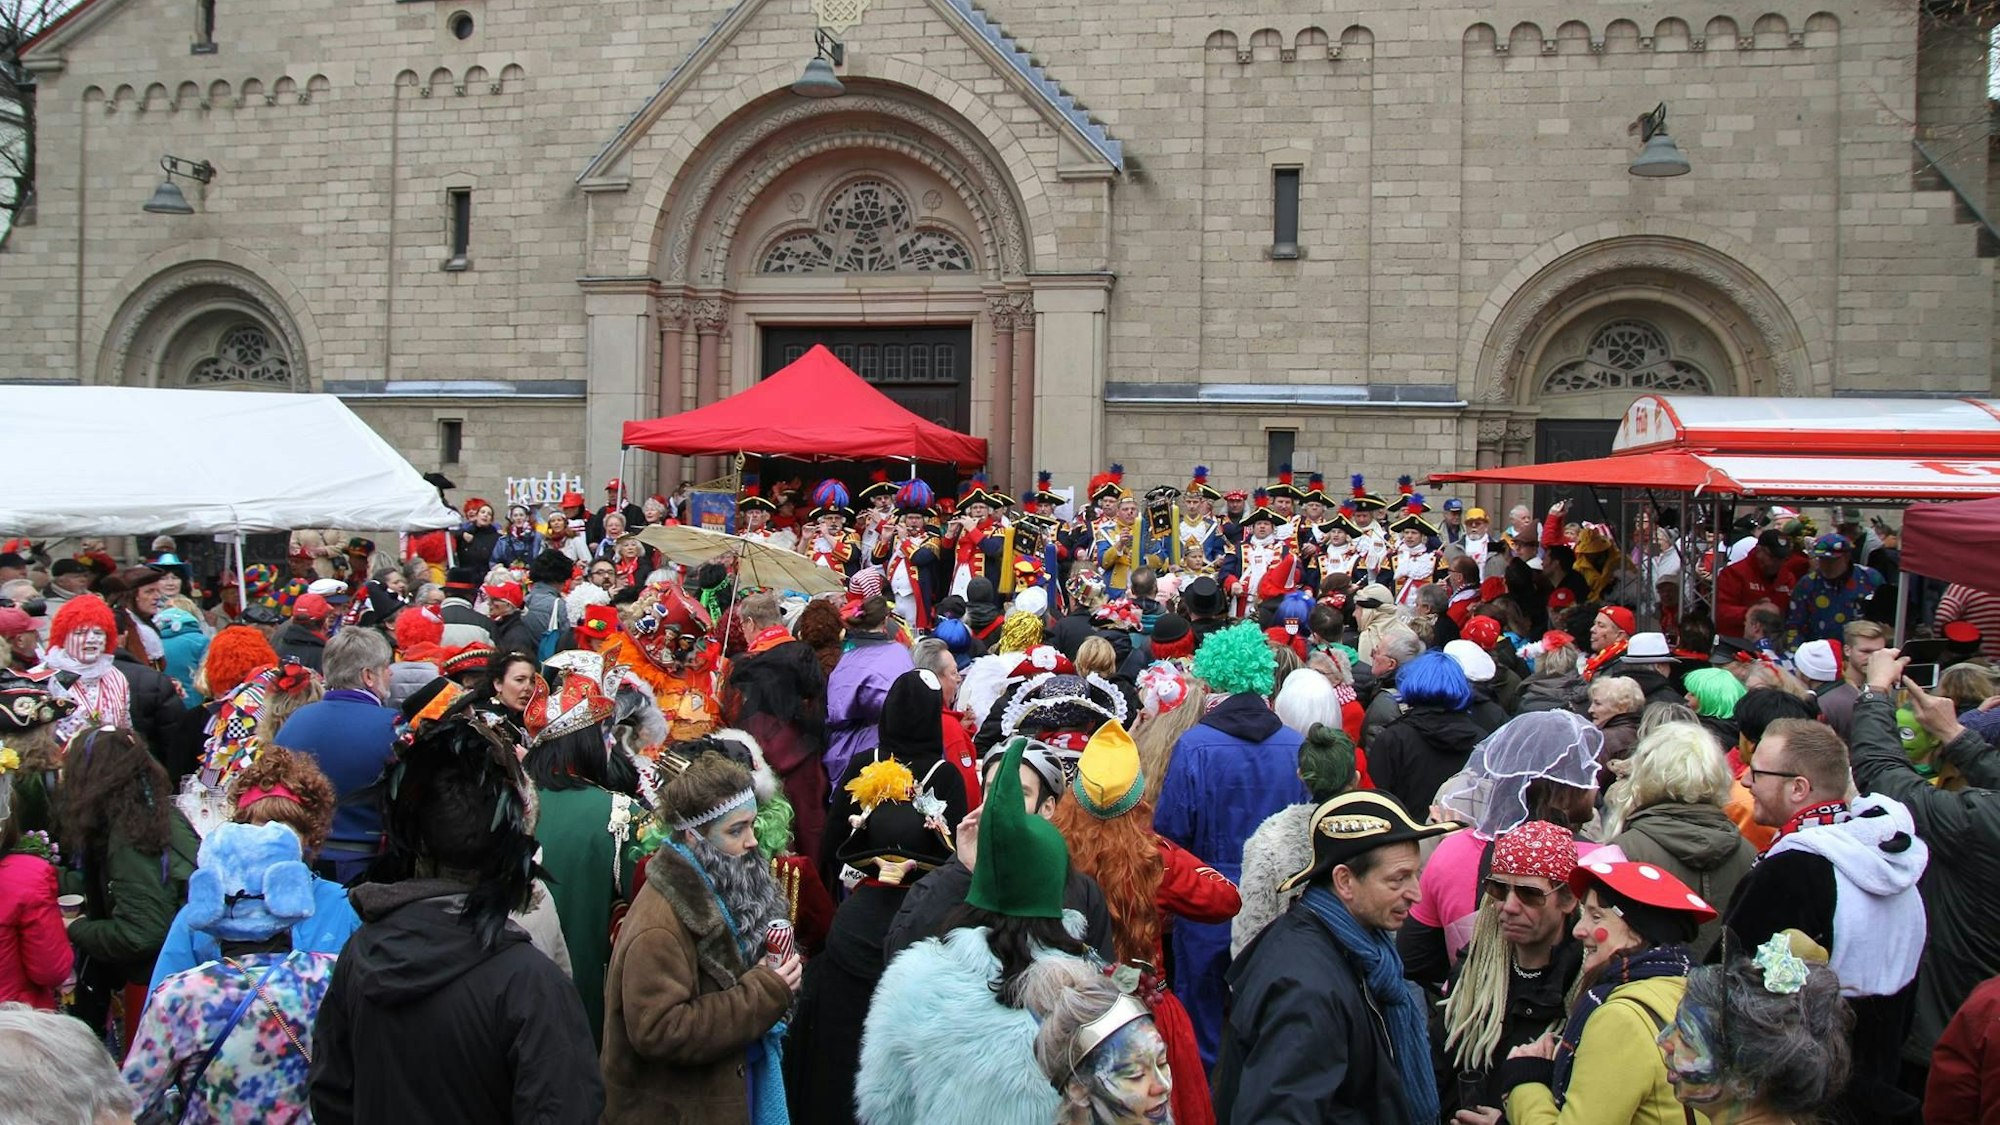 Karneval an der Pfarrkirche St. Nikolaus in Sülz.